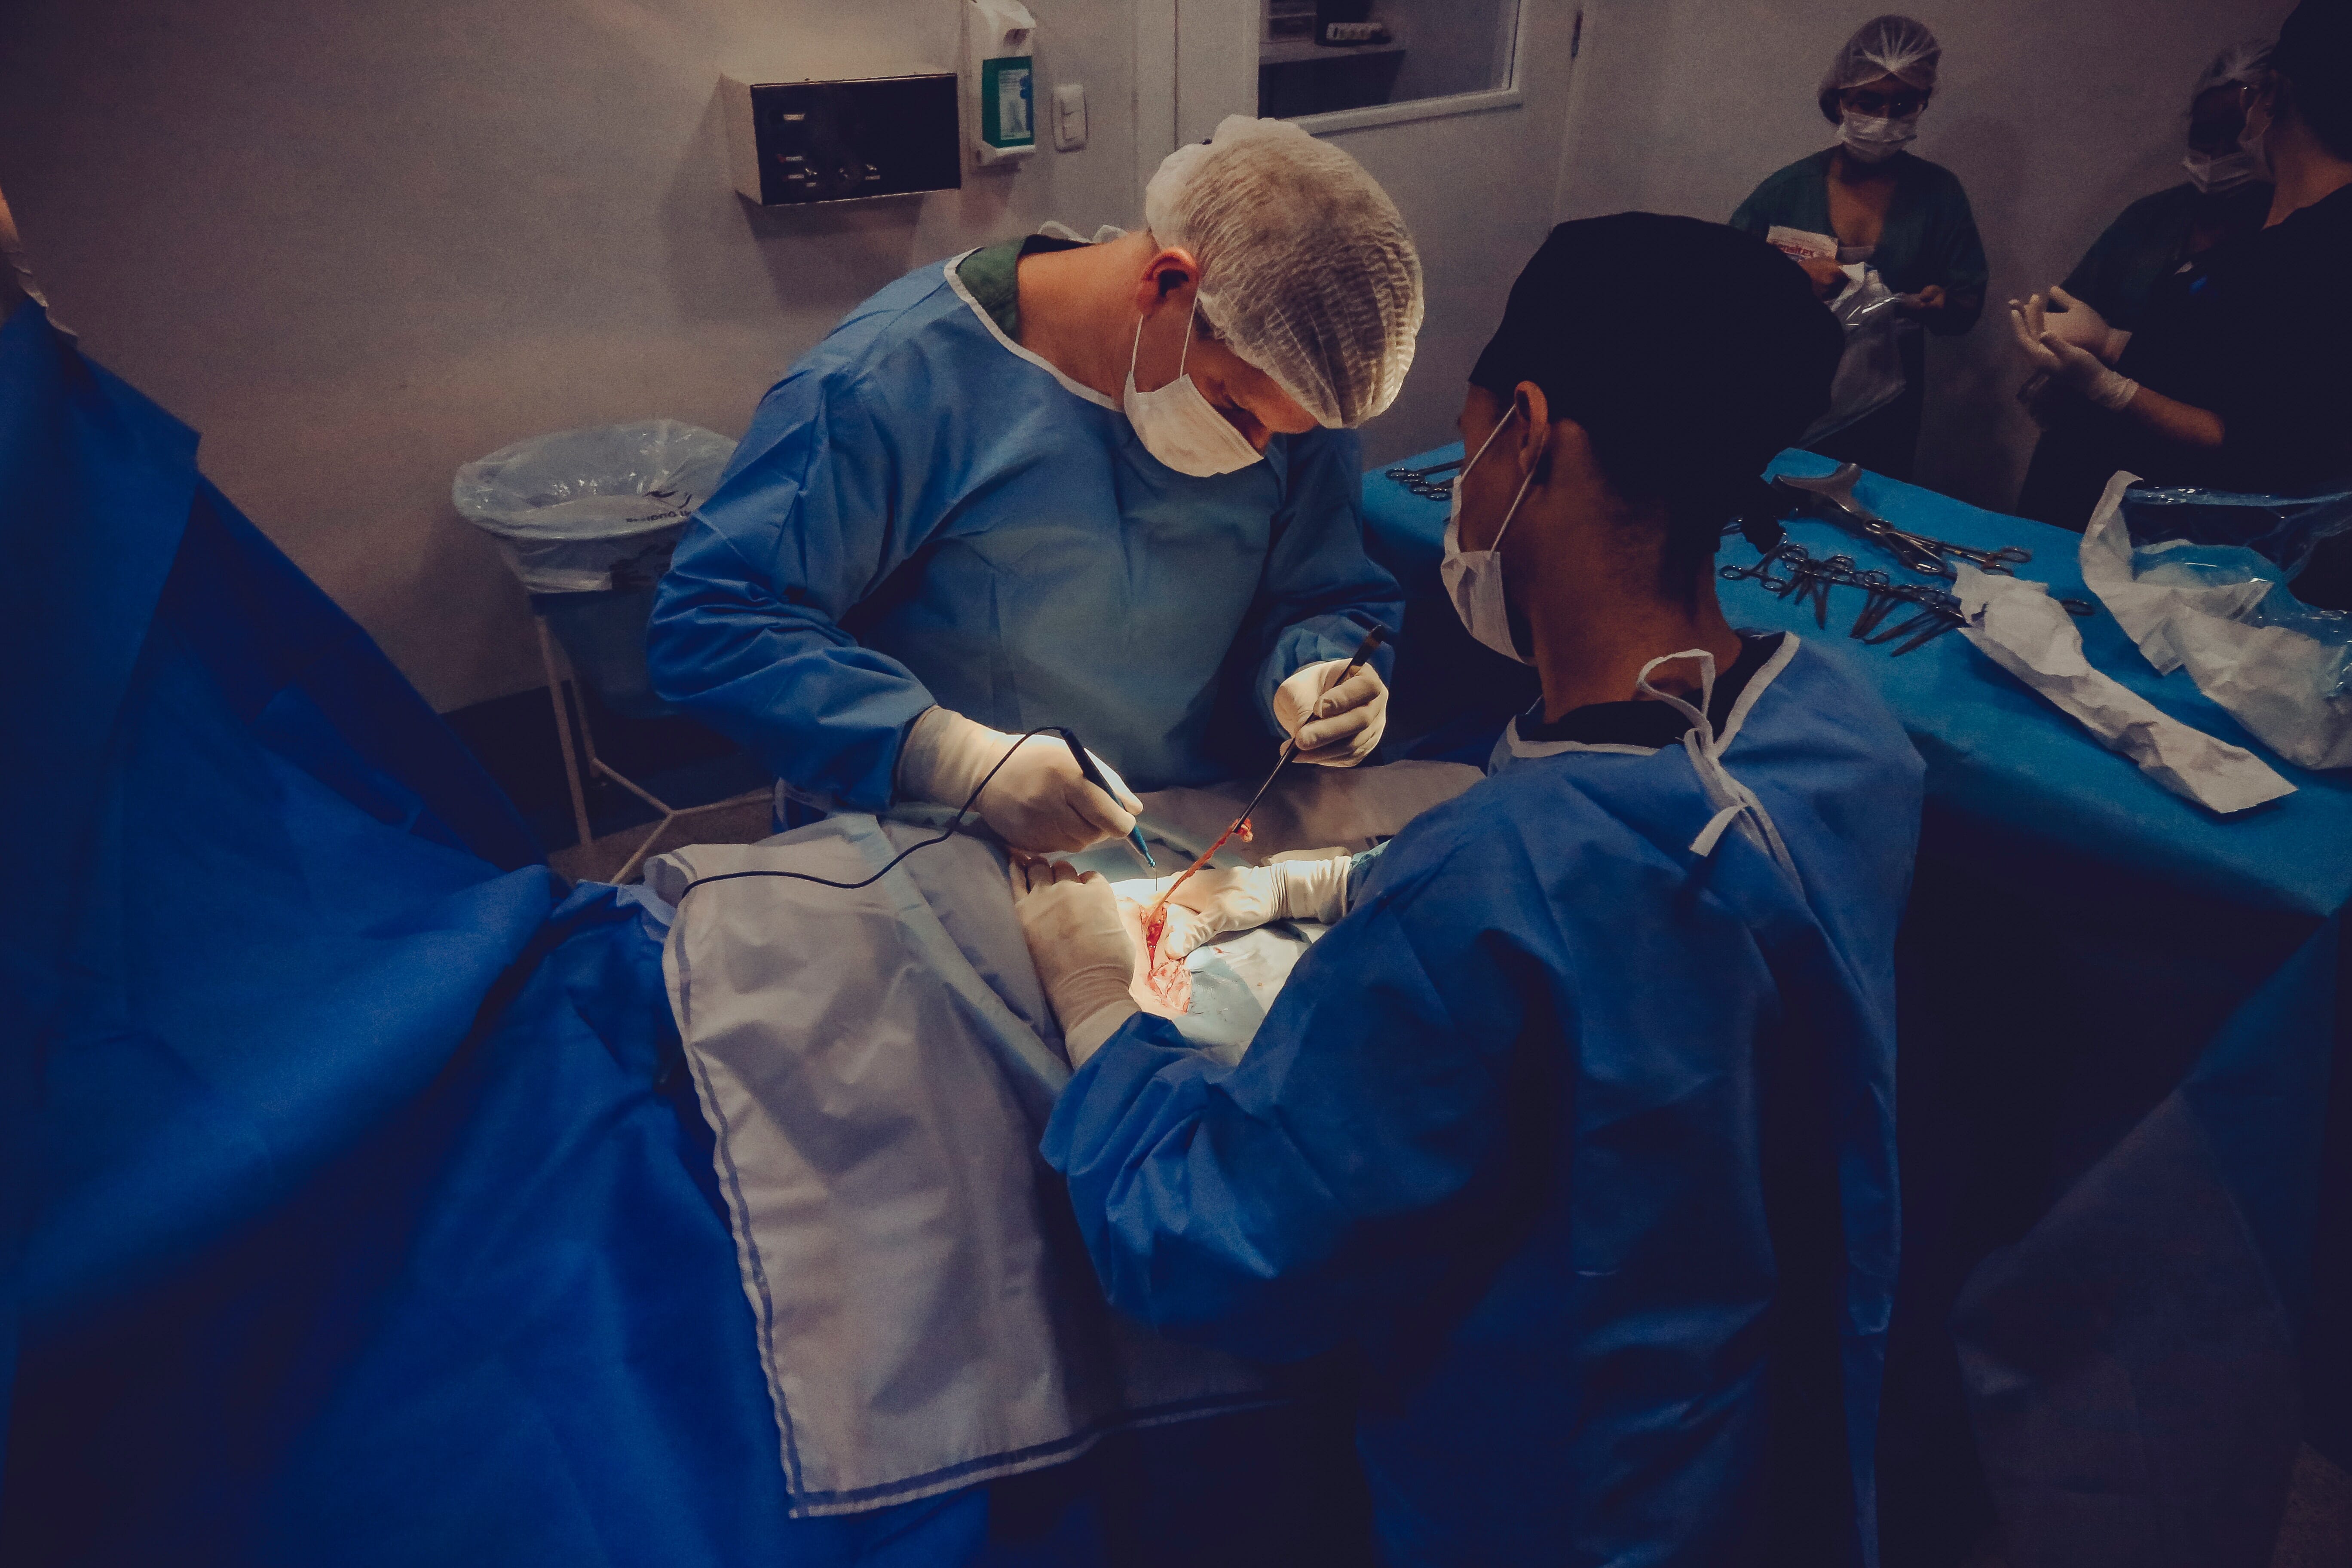 Medical photographers work alongside nurses and doctors, documenting procedures.